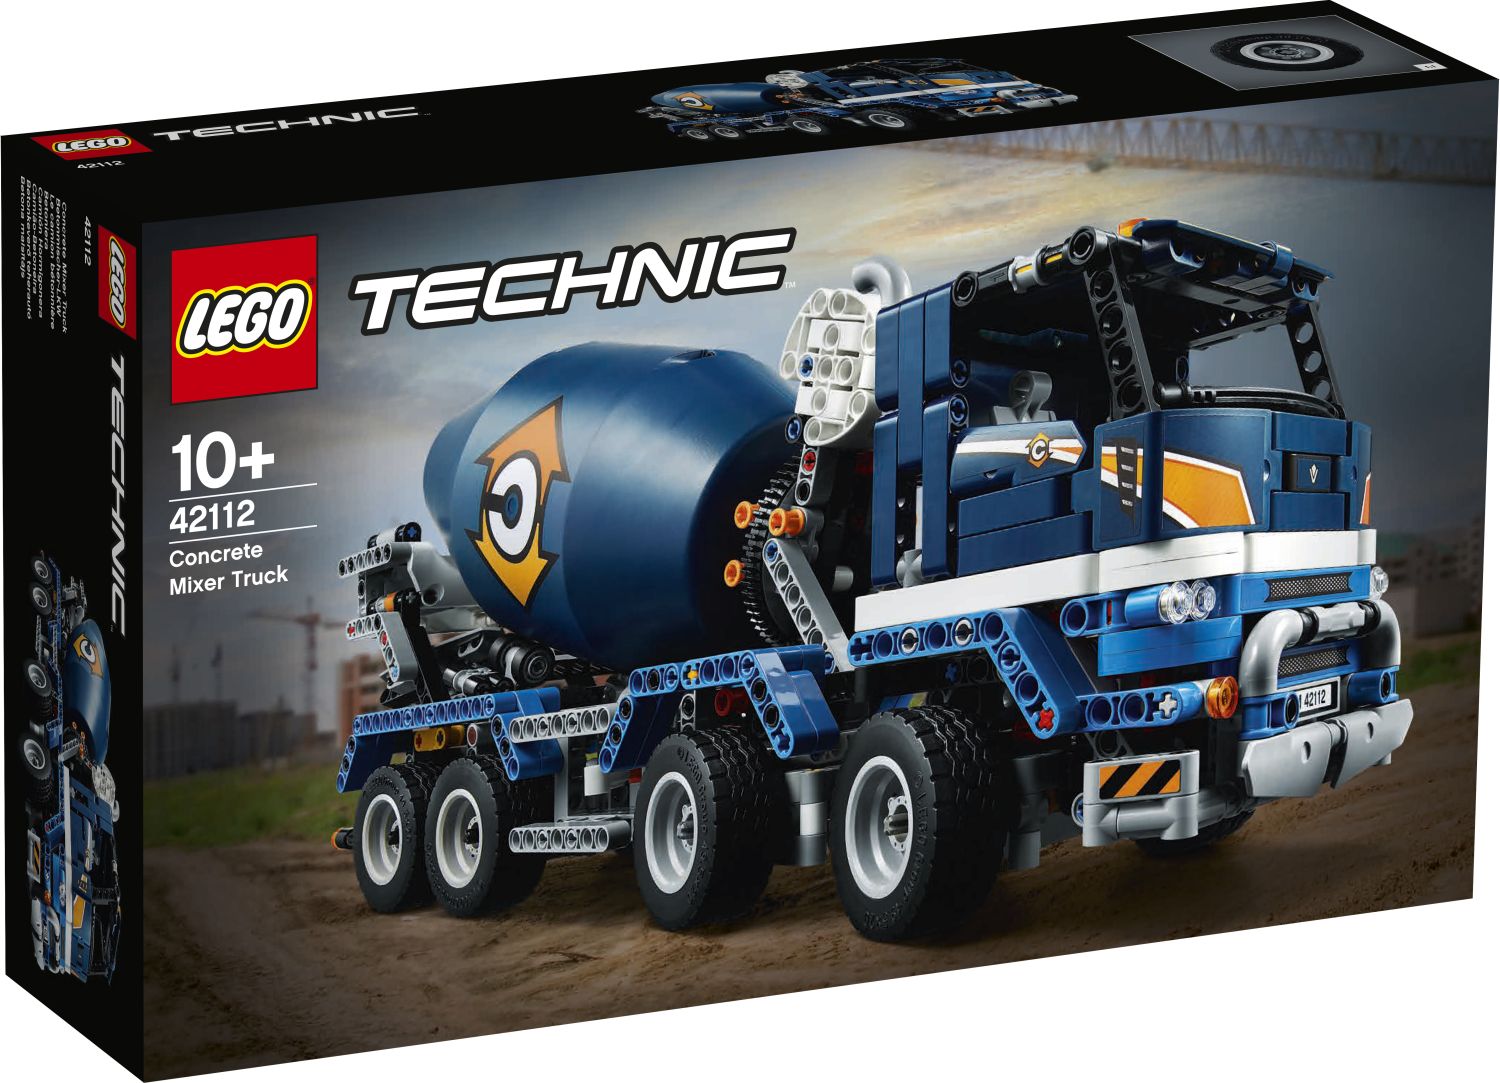 reb Materialisme tildele LEGO Technic Summer 2020 Official Set Images - The Brick Fan